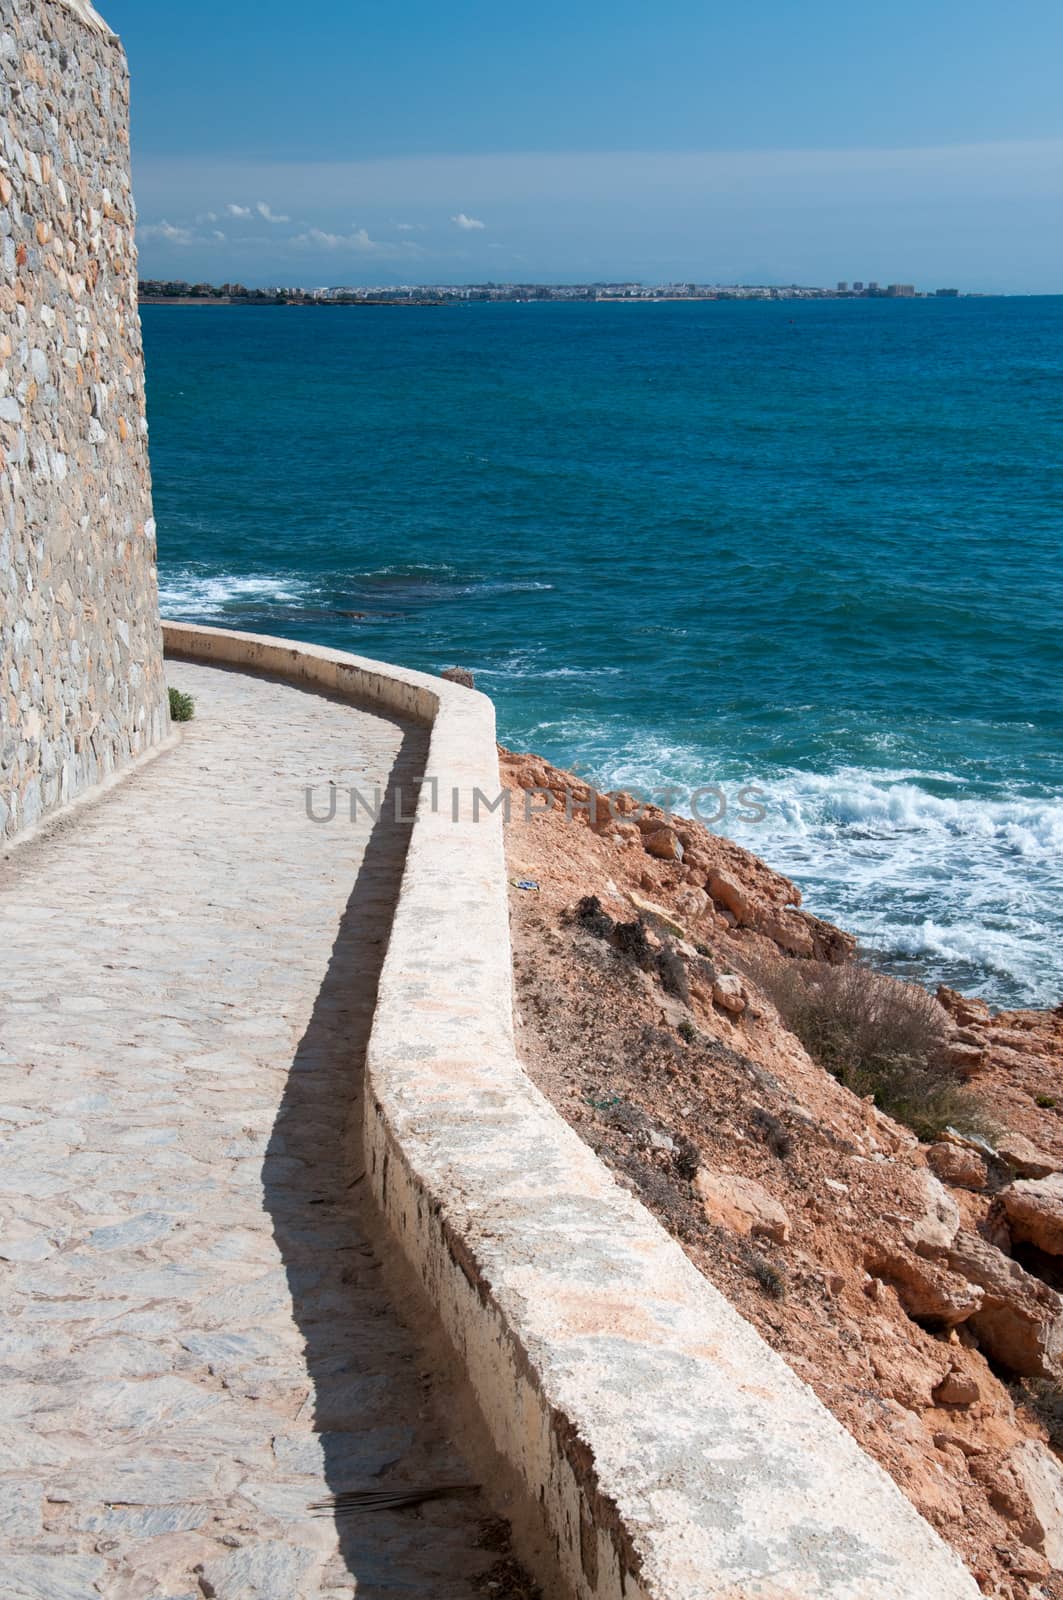 Edgy path along Mediterranean shore with horizon, La Zenia, Costa Blanca, Spain.